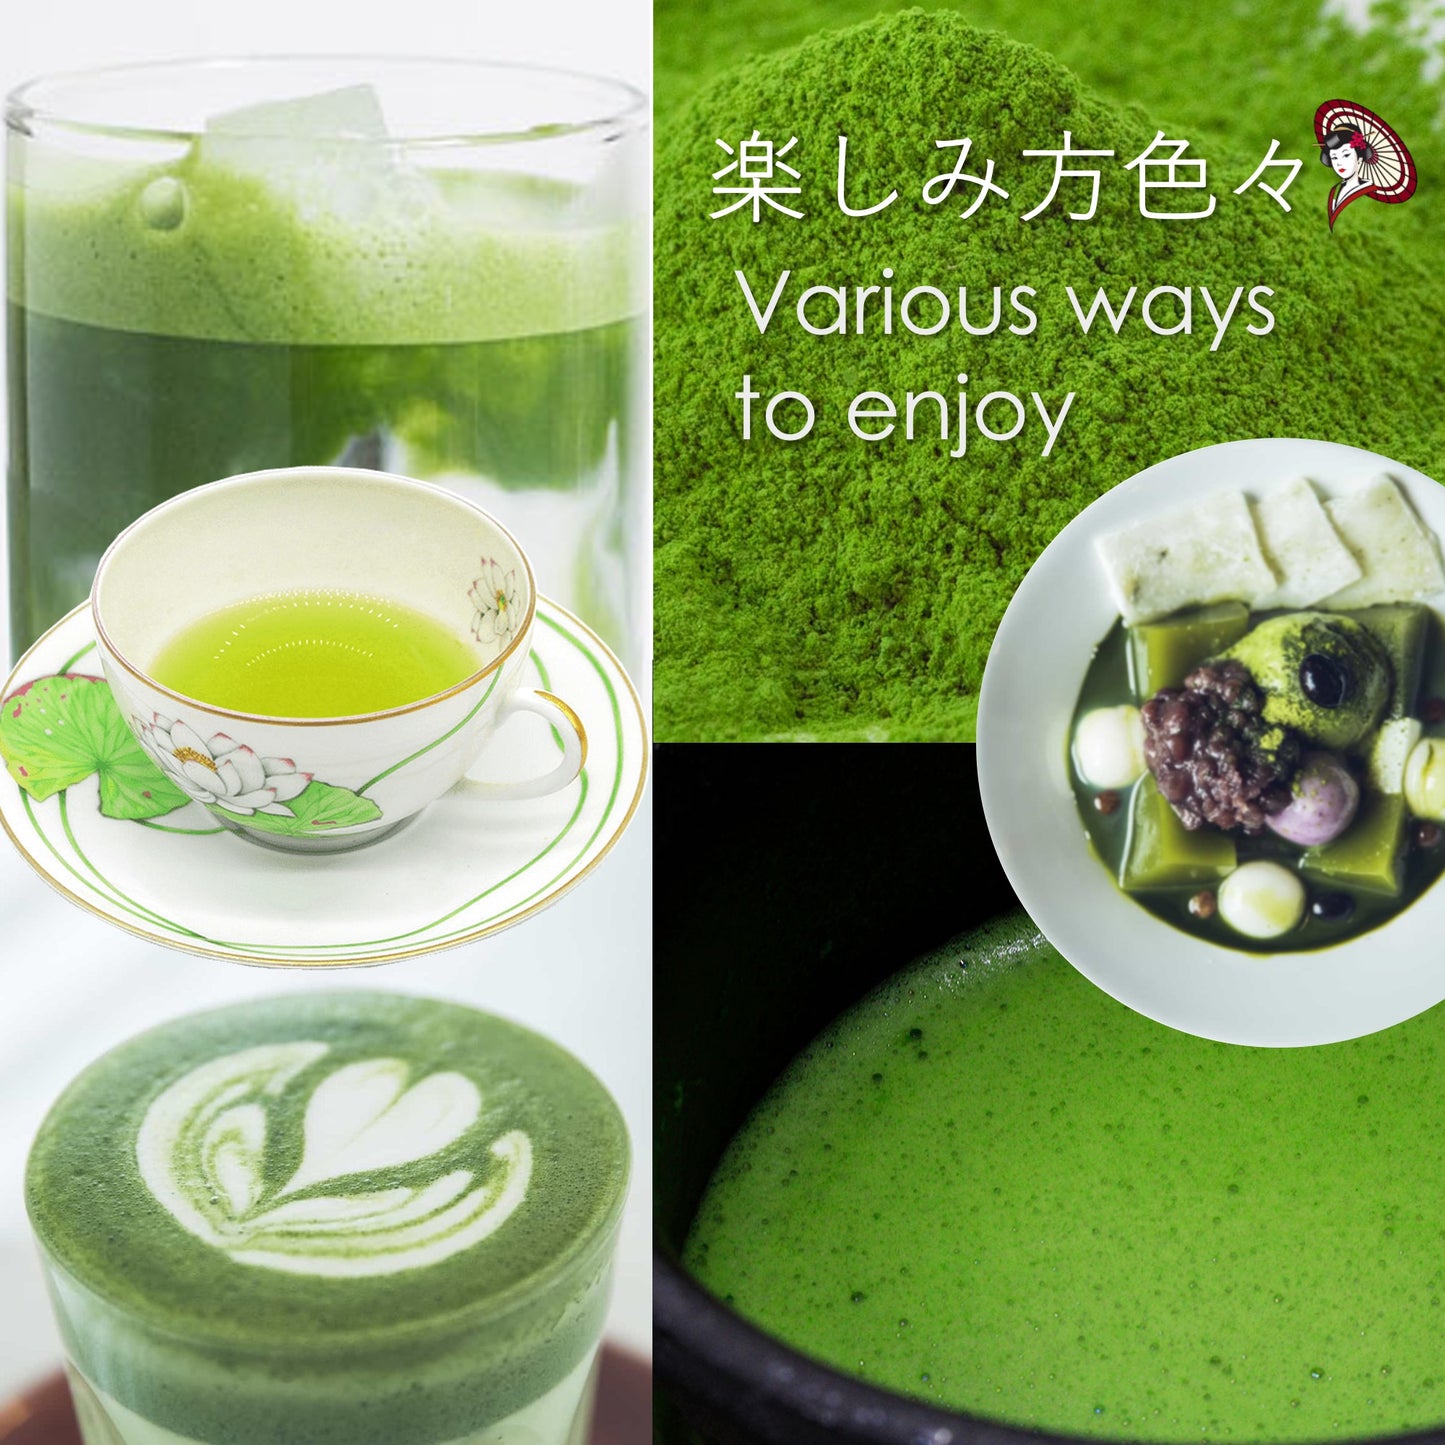 [Dreaming Matcha (Green)] Culinary Confectionery grade powder 100% Pure Yame tea ماتشا "夢みる抹茶"（緑）一番茶入り二番茶 抹茶 粉末 パウダー 製菓グレード 100% 八女産 向抹茶（むこうまっちゃ）Mukoh Matcha